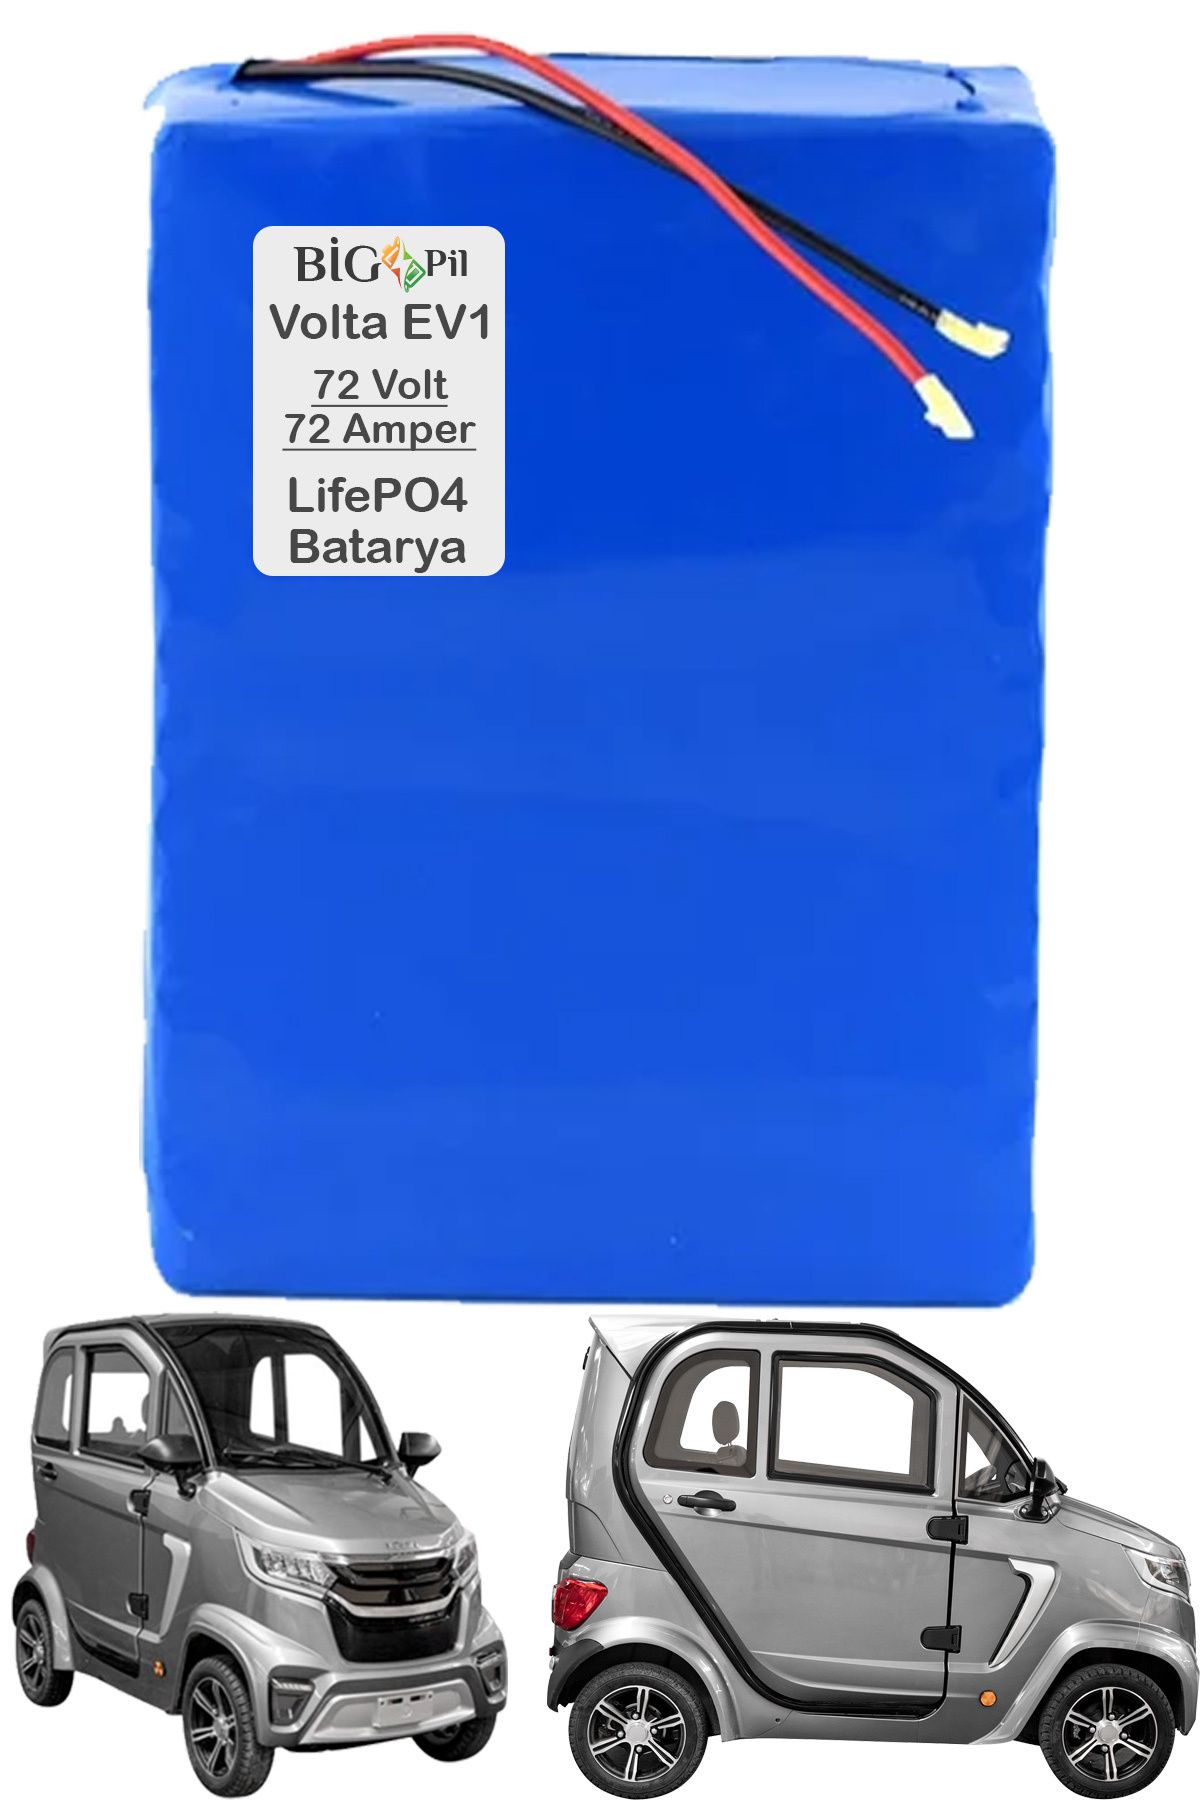 Big Pil Volta EV1 Elektrikli Araba Bataryası 72 Volt 72 Amper Smart LiFePO4 Batarya